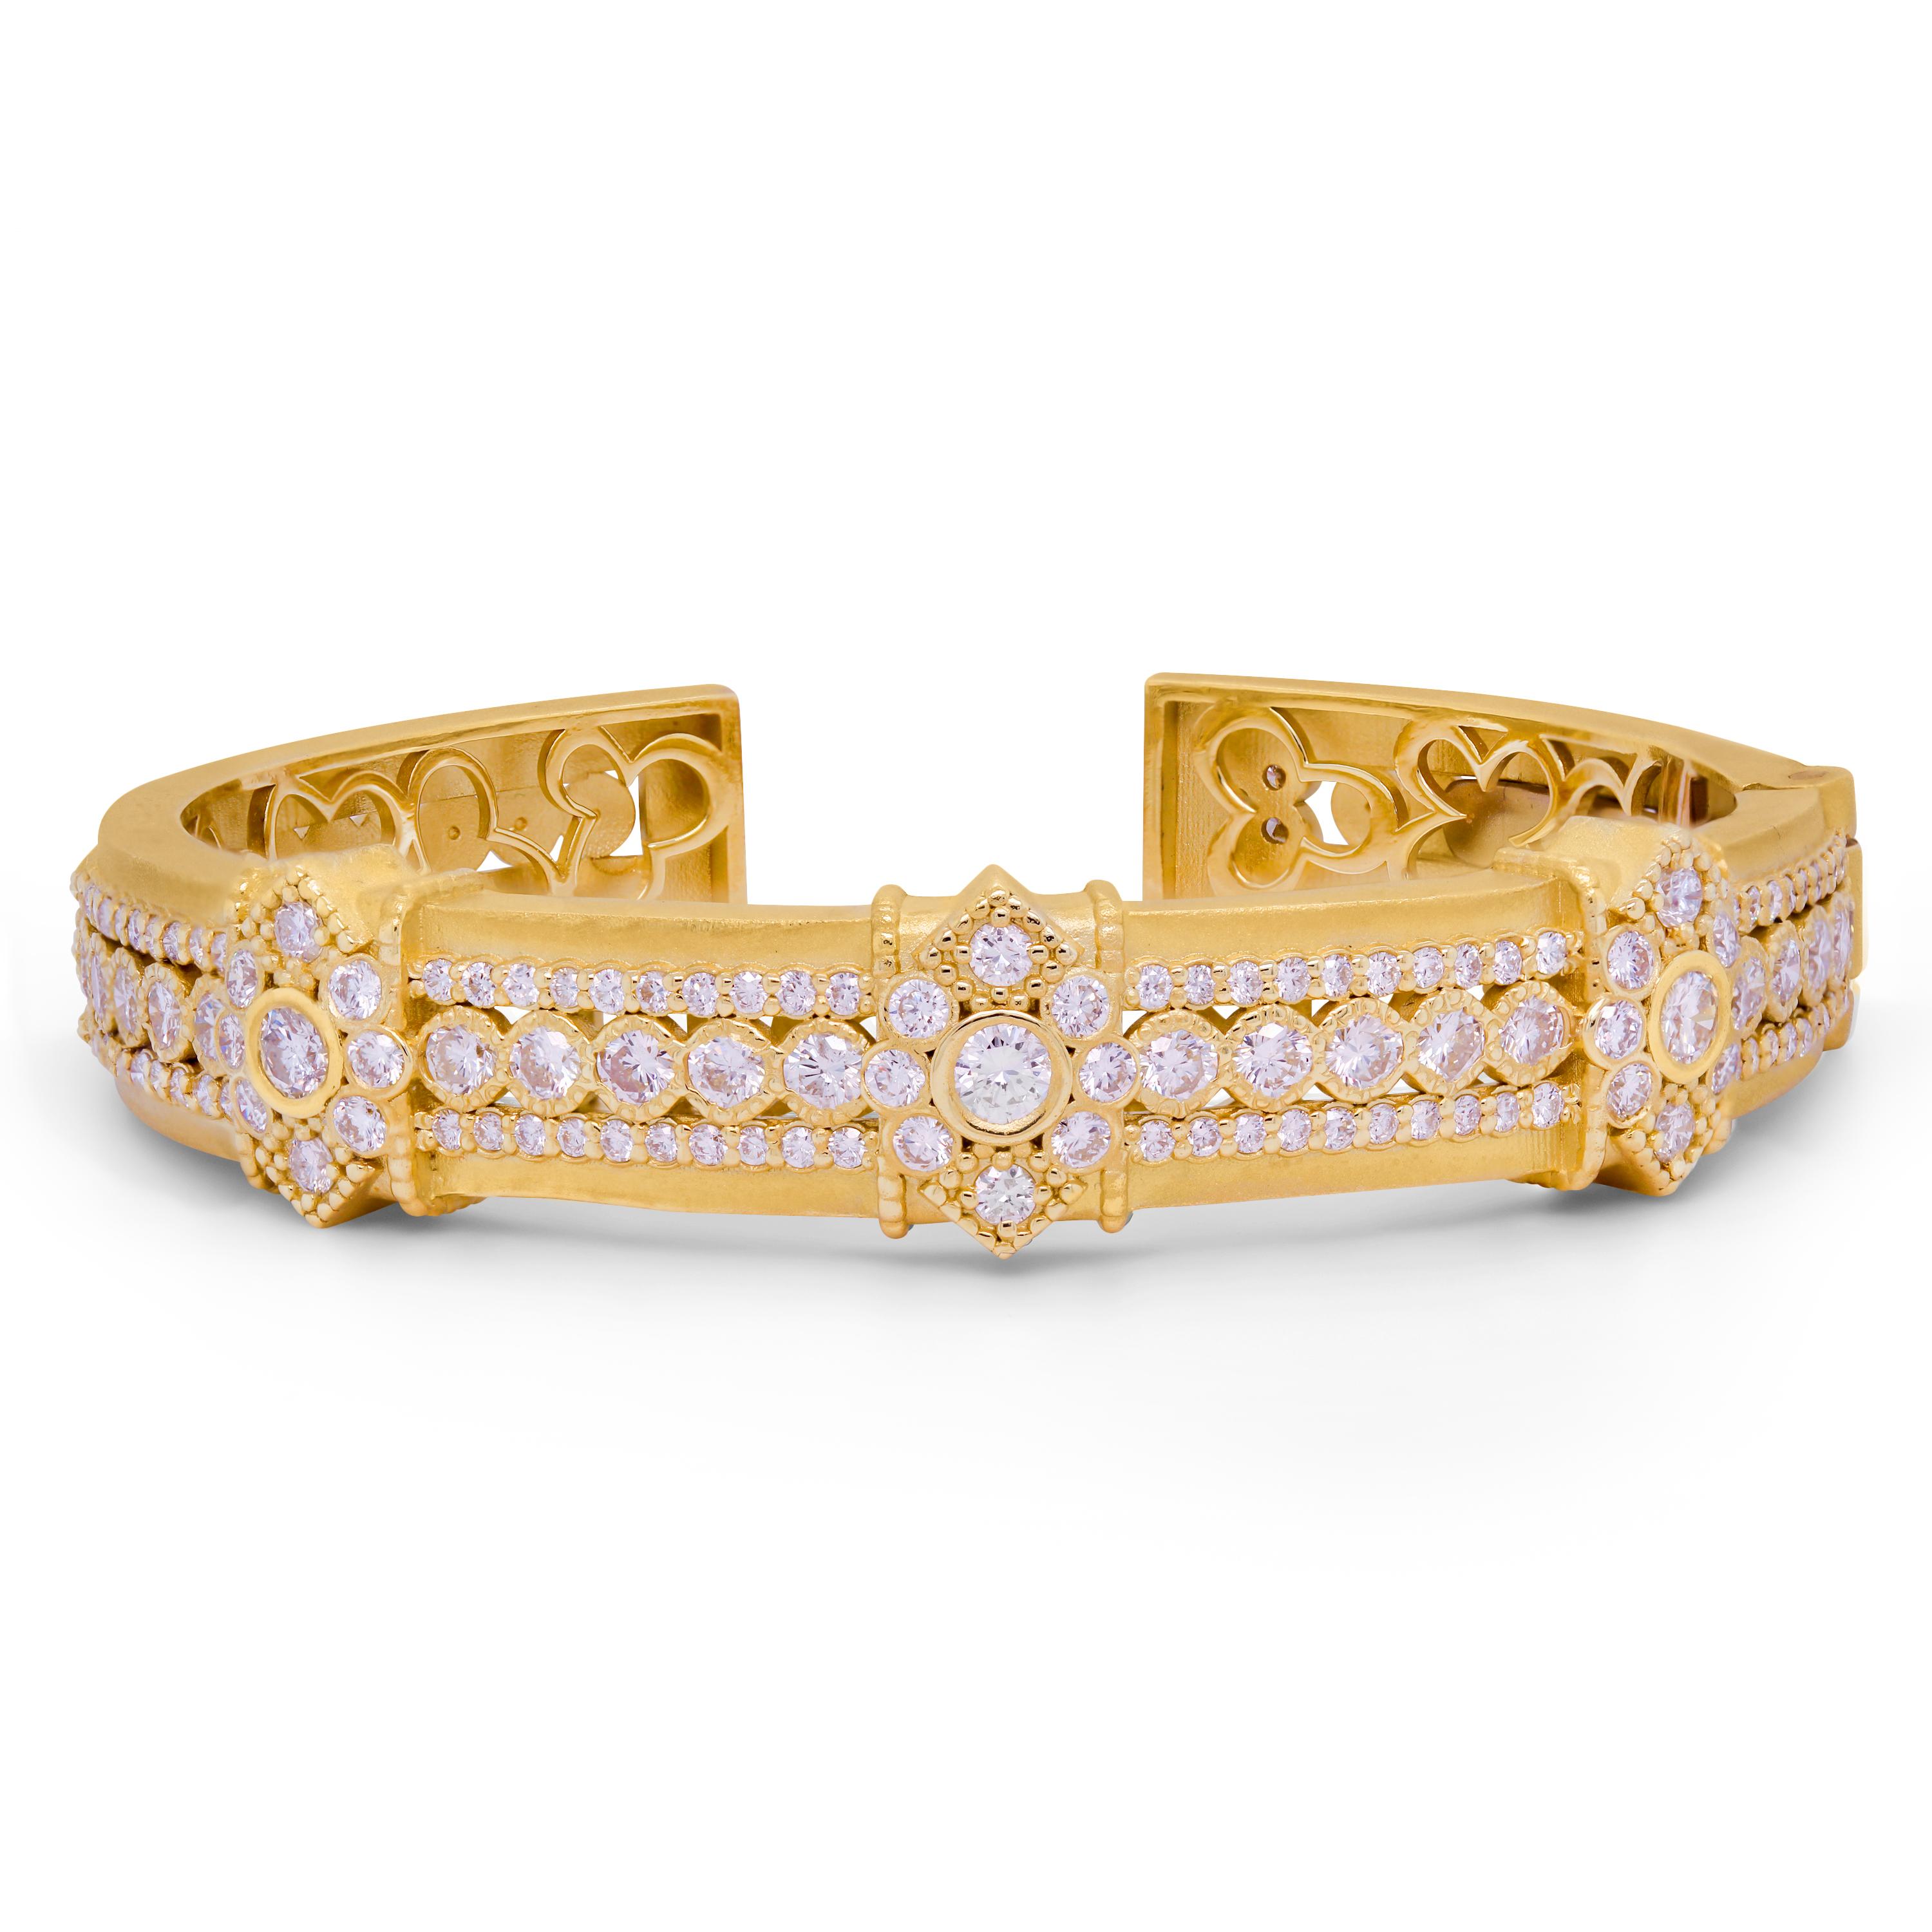 Stambolian 18K Yellow Gold and Diamond Bangle Bracelet For Sale 2